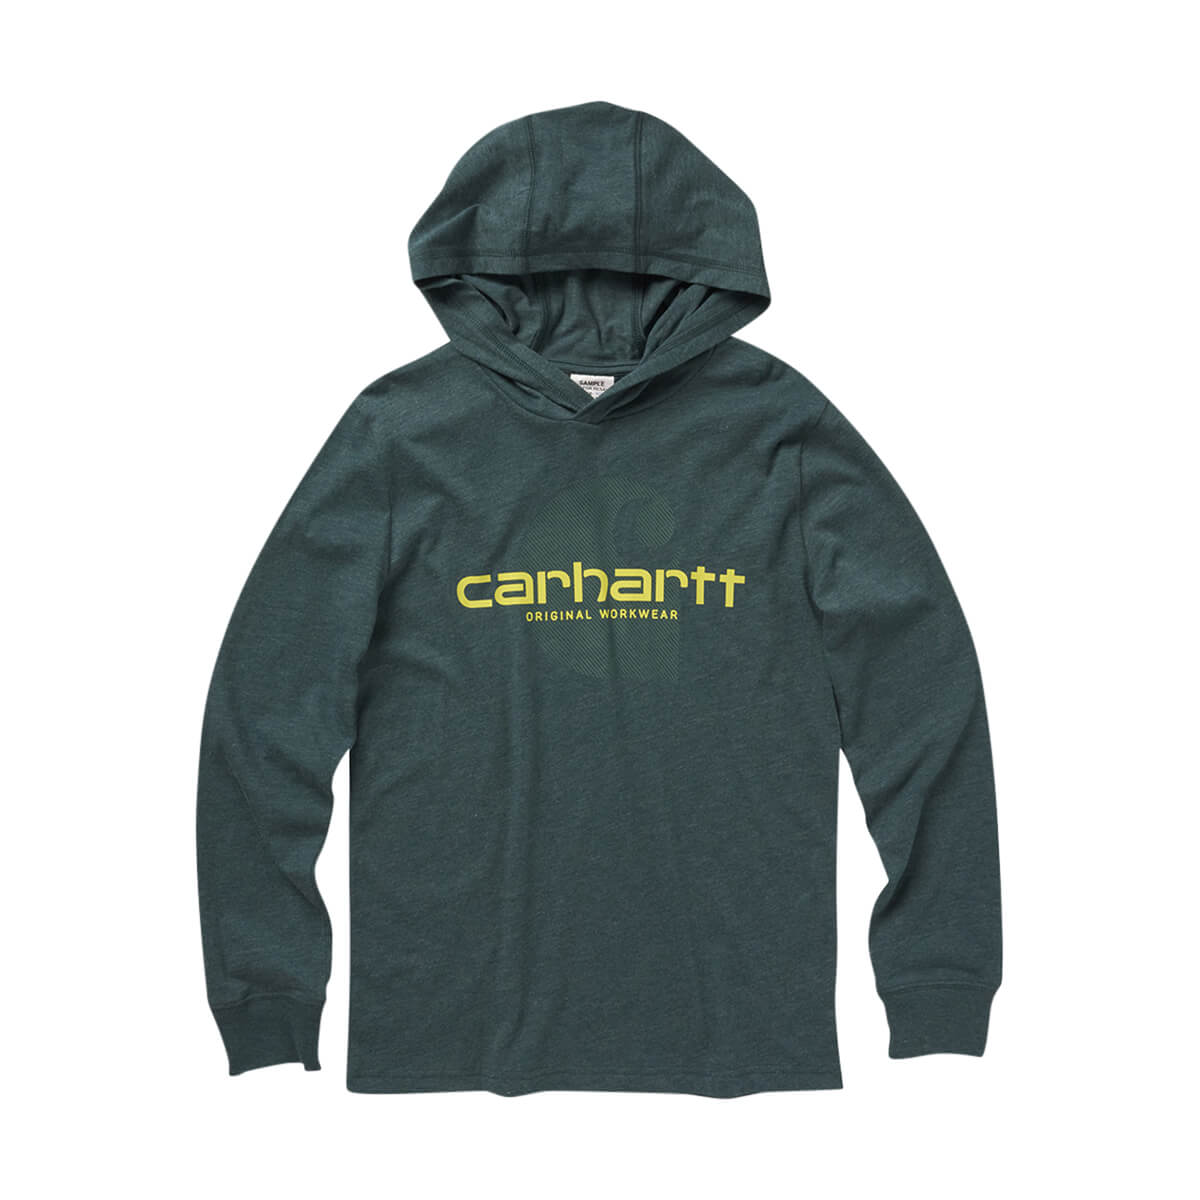 Carhartt Long-Sleeve Hooded Graphic T-Shirt - Teal